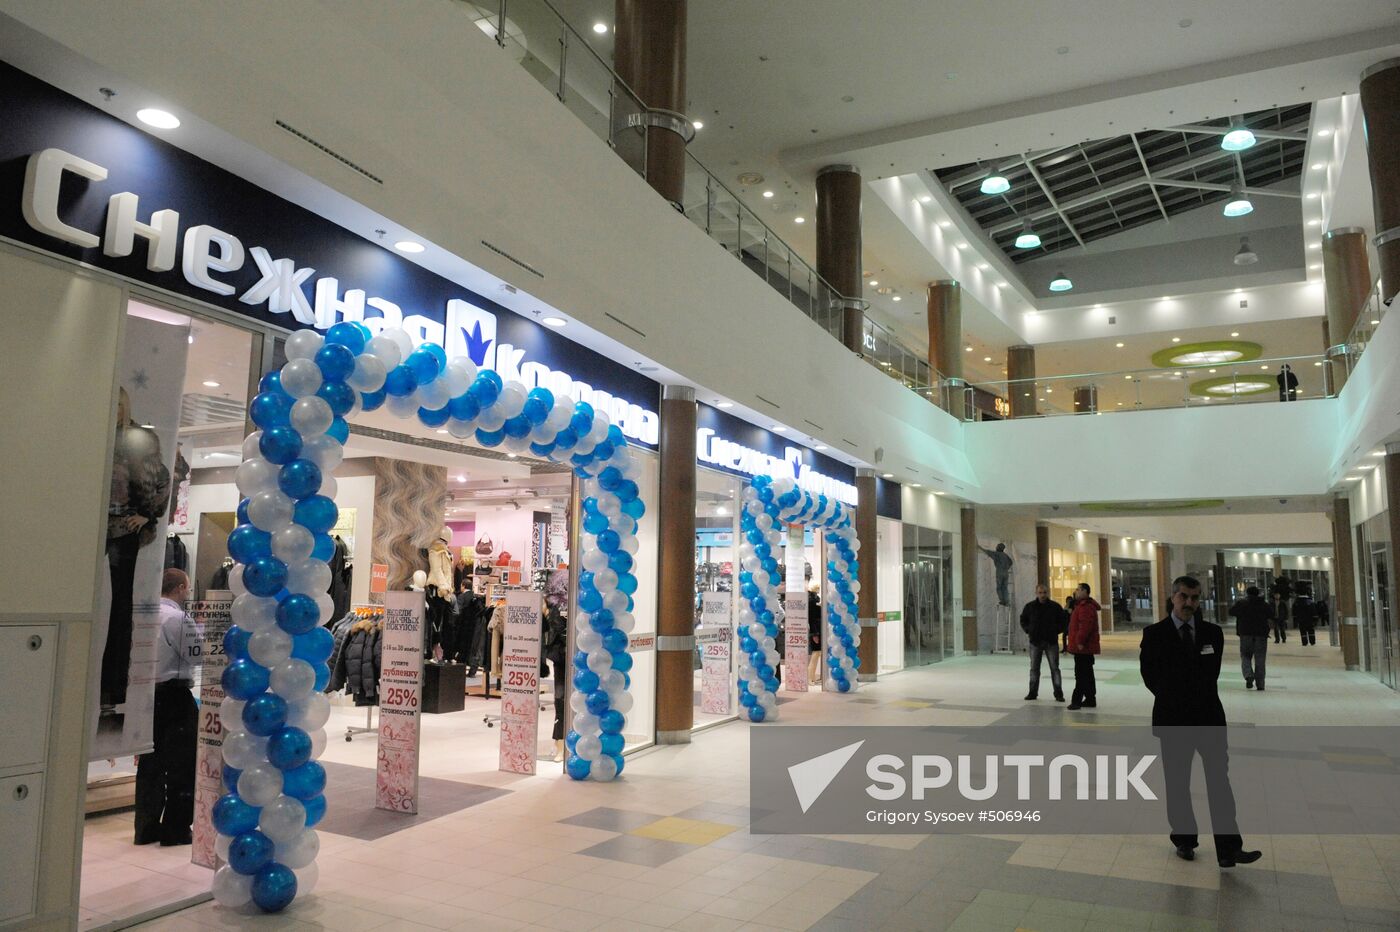 Zolotoi Vavilon-Rostokino shopping and entertainment center